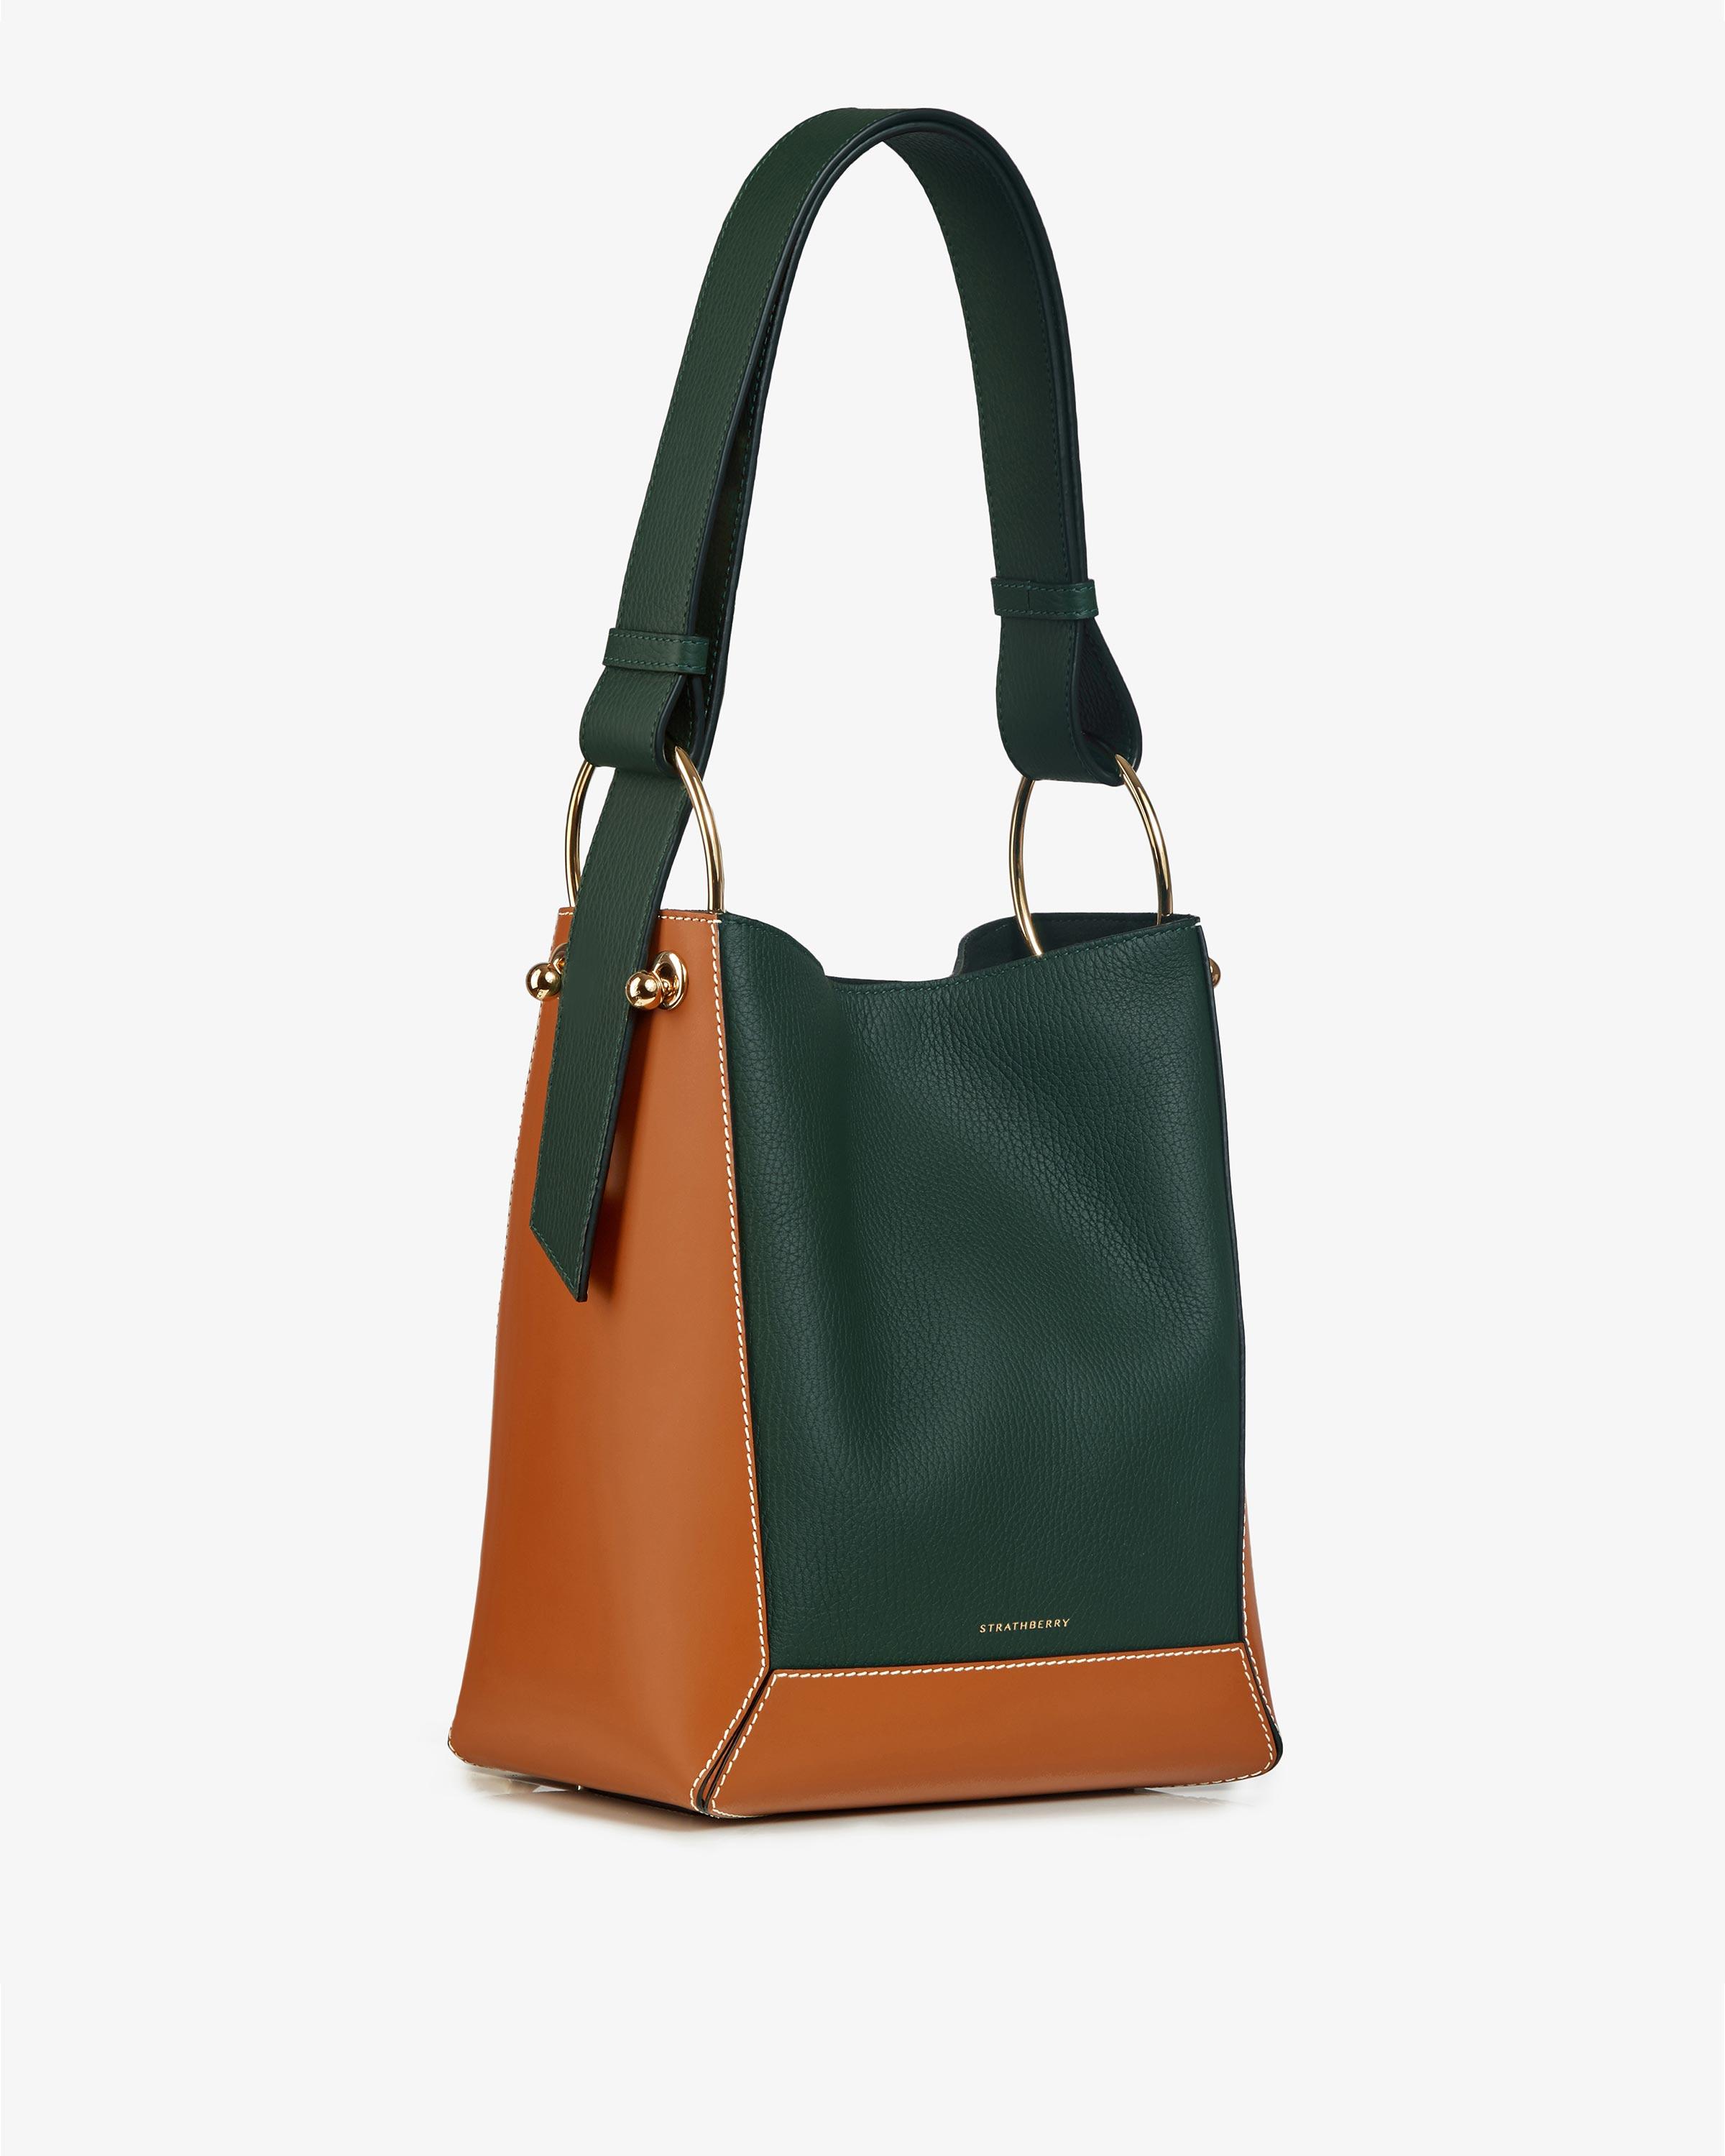 Strathberry Leather Lana Midi Bucket Bag in Tan/Bottle Green 